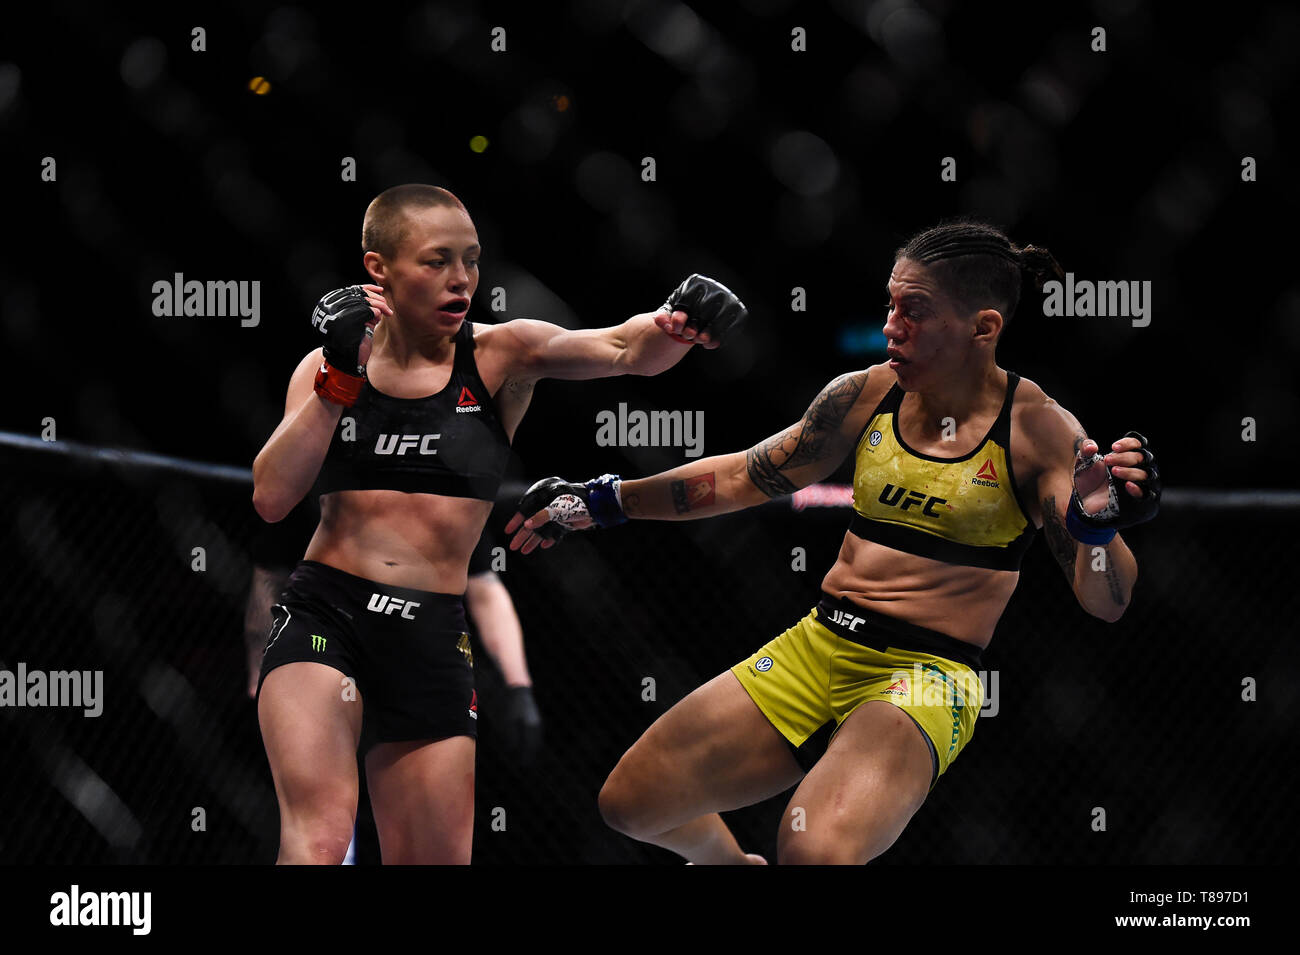 UFC 237: NAMAJUNAS vs. ANDRADE - Fighters Rose Namajunas (red glove) and  Jessica Andrade (blue glove) during